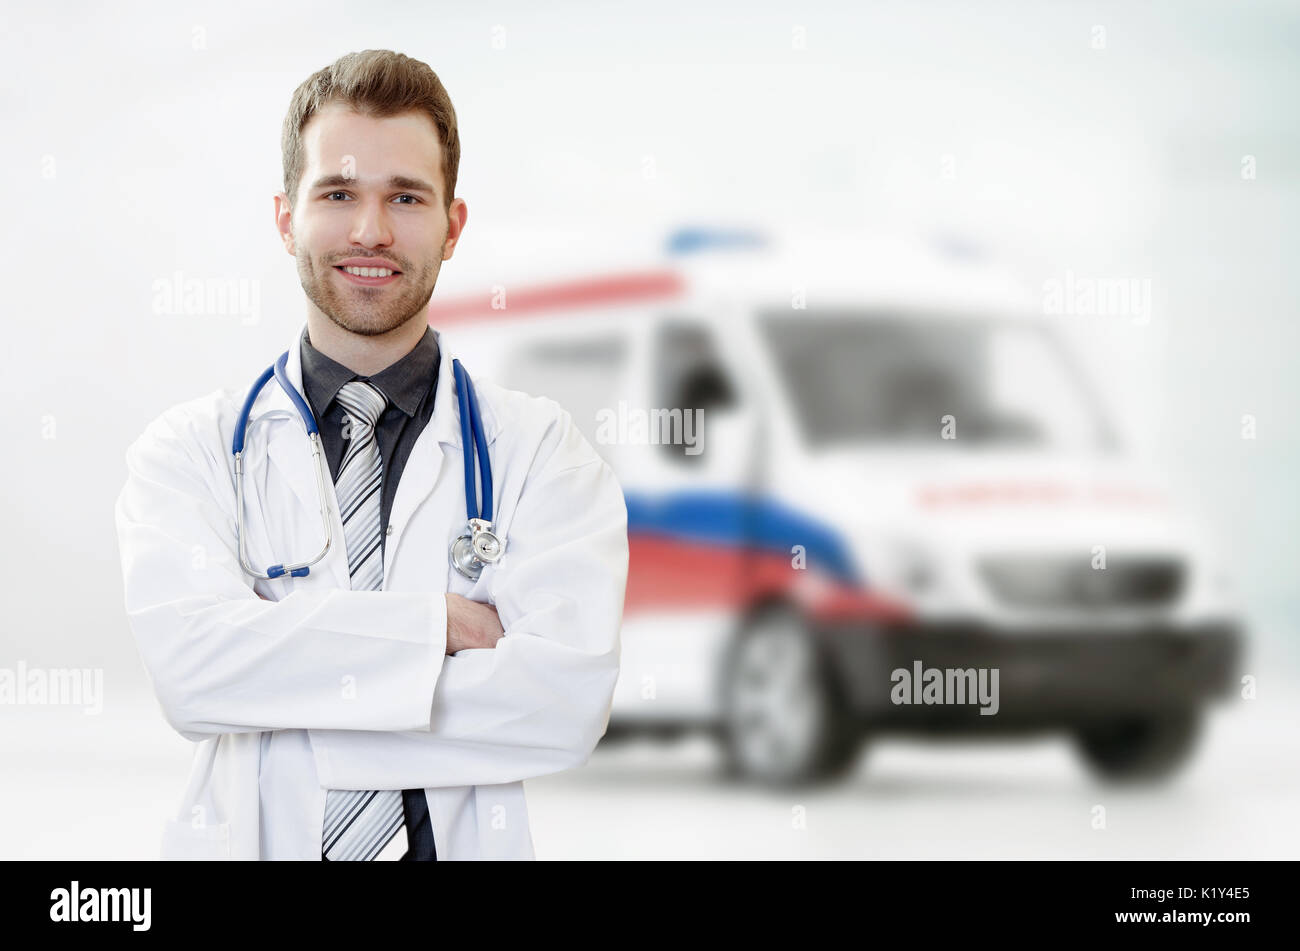 Doctor medic ambulance health care medicine hospital stethoscope composition Stock Photo